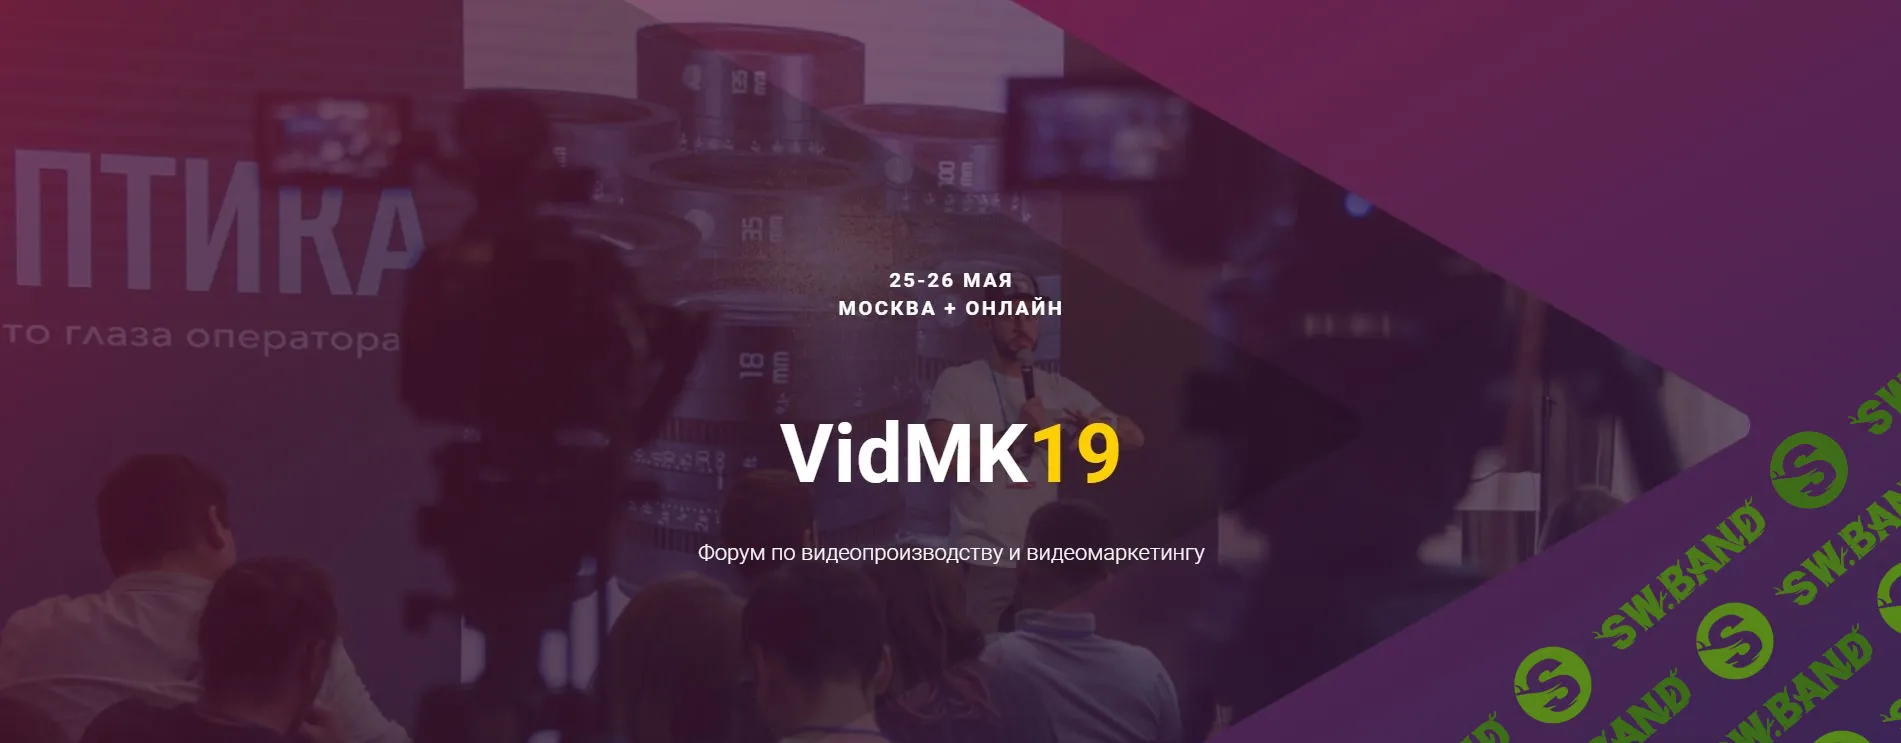 VidMK19 - Форум по видеопроизводству и видеомаркетингу (2019)